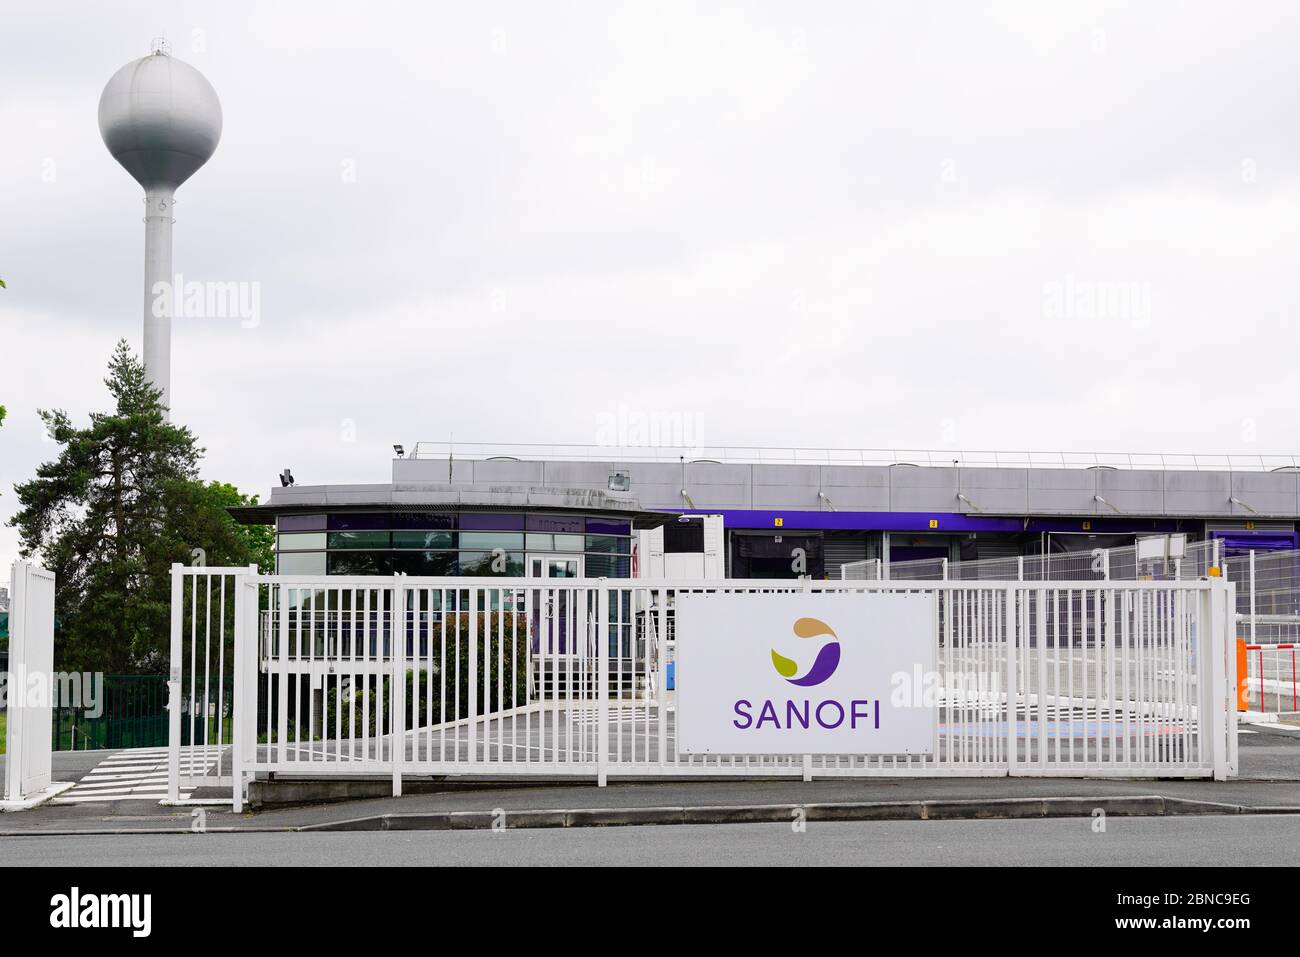 Bordeaux , Aquitaine / France - 05 14 2020 : Sanofi factory logo sign french vaccines multinational pharmaceutical company Stock Photo